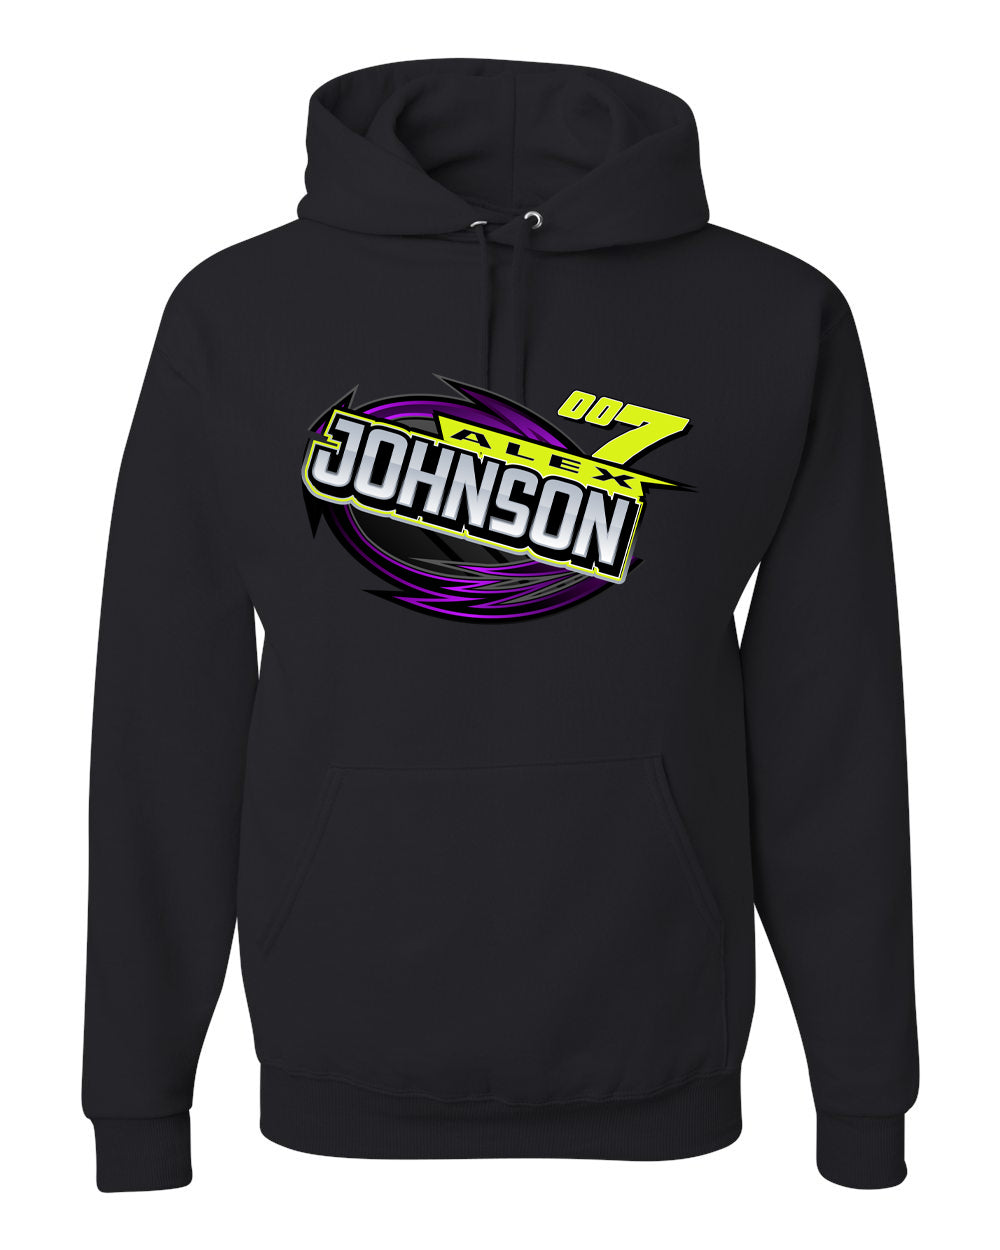 Alex Johnson Racing Hooded Sweatshirt Black